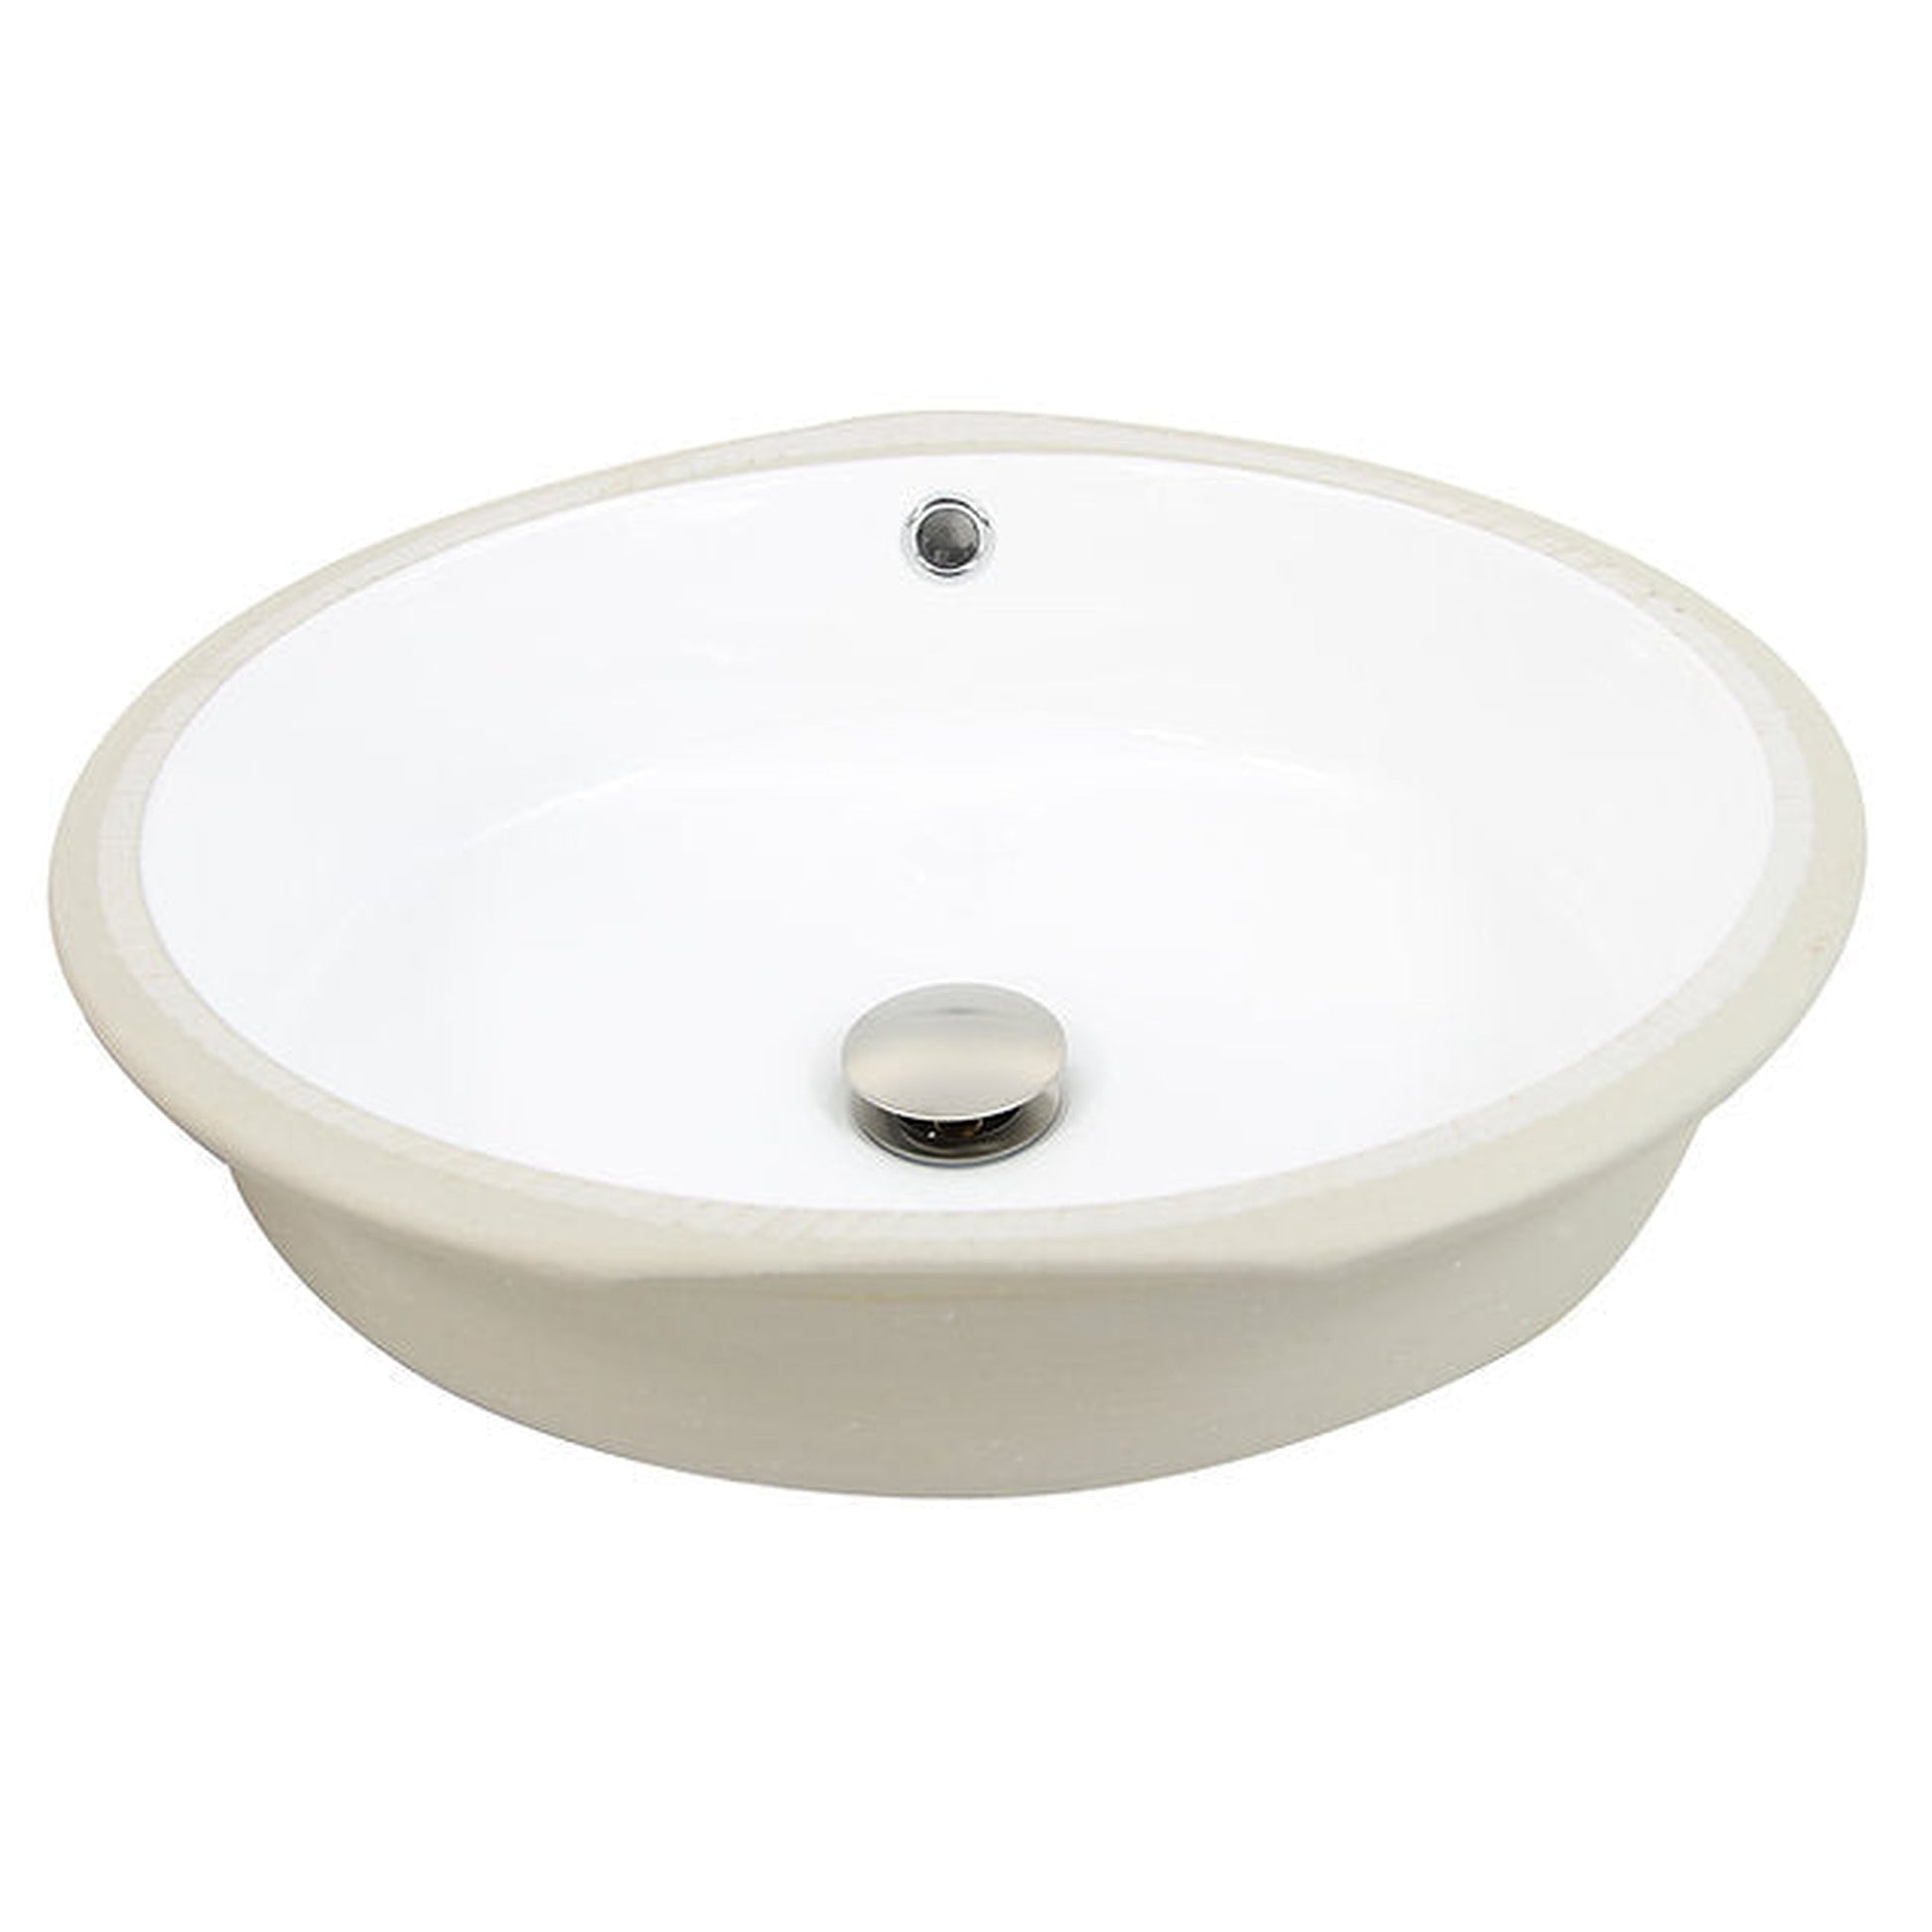 Nantucket Sinks Great Point 19" W x 17" D Oval Porcelain Enamel Glaze Undermount Ceramic Sink In White With Oveflow